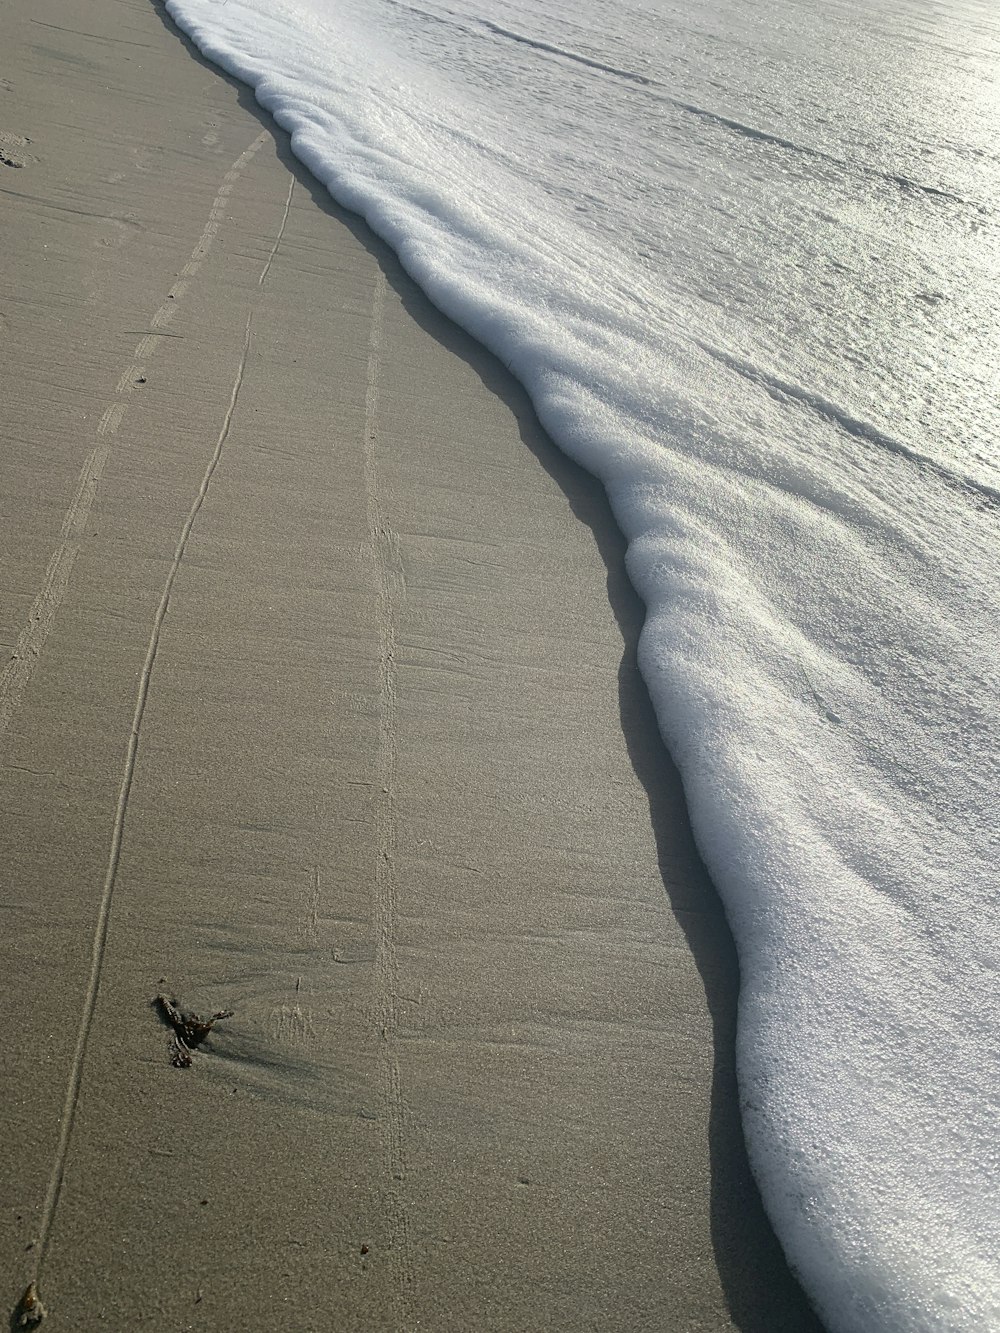 a person walking along a beach next to the ocean